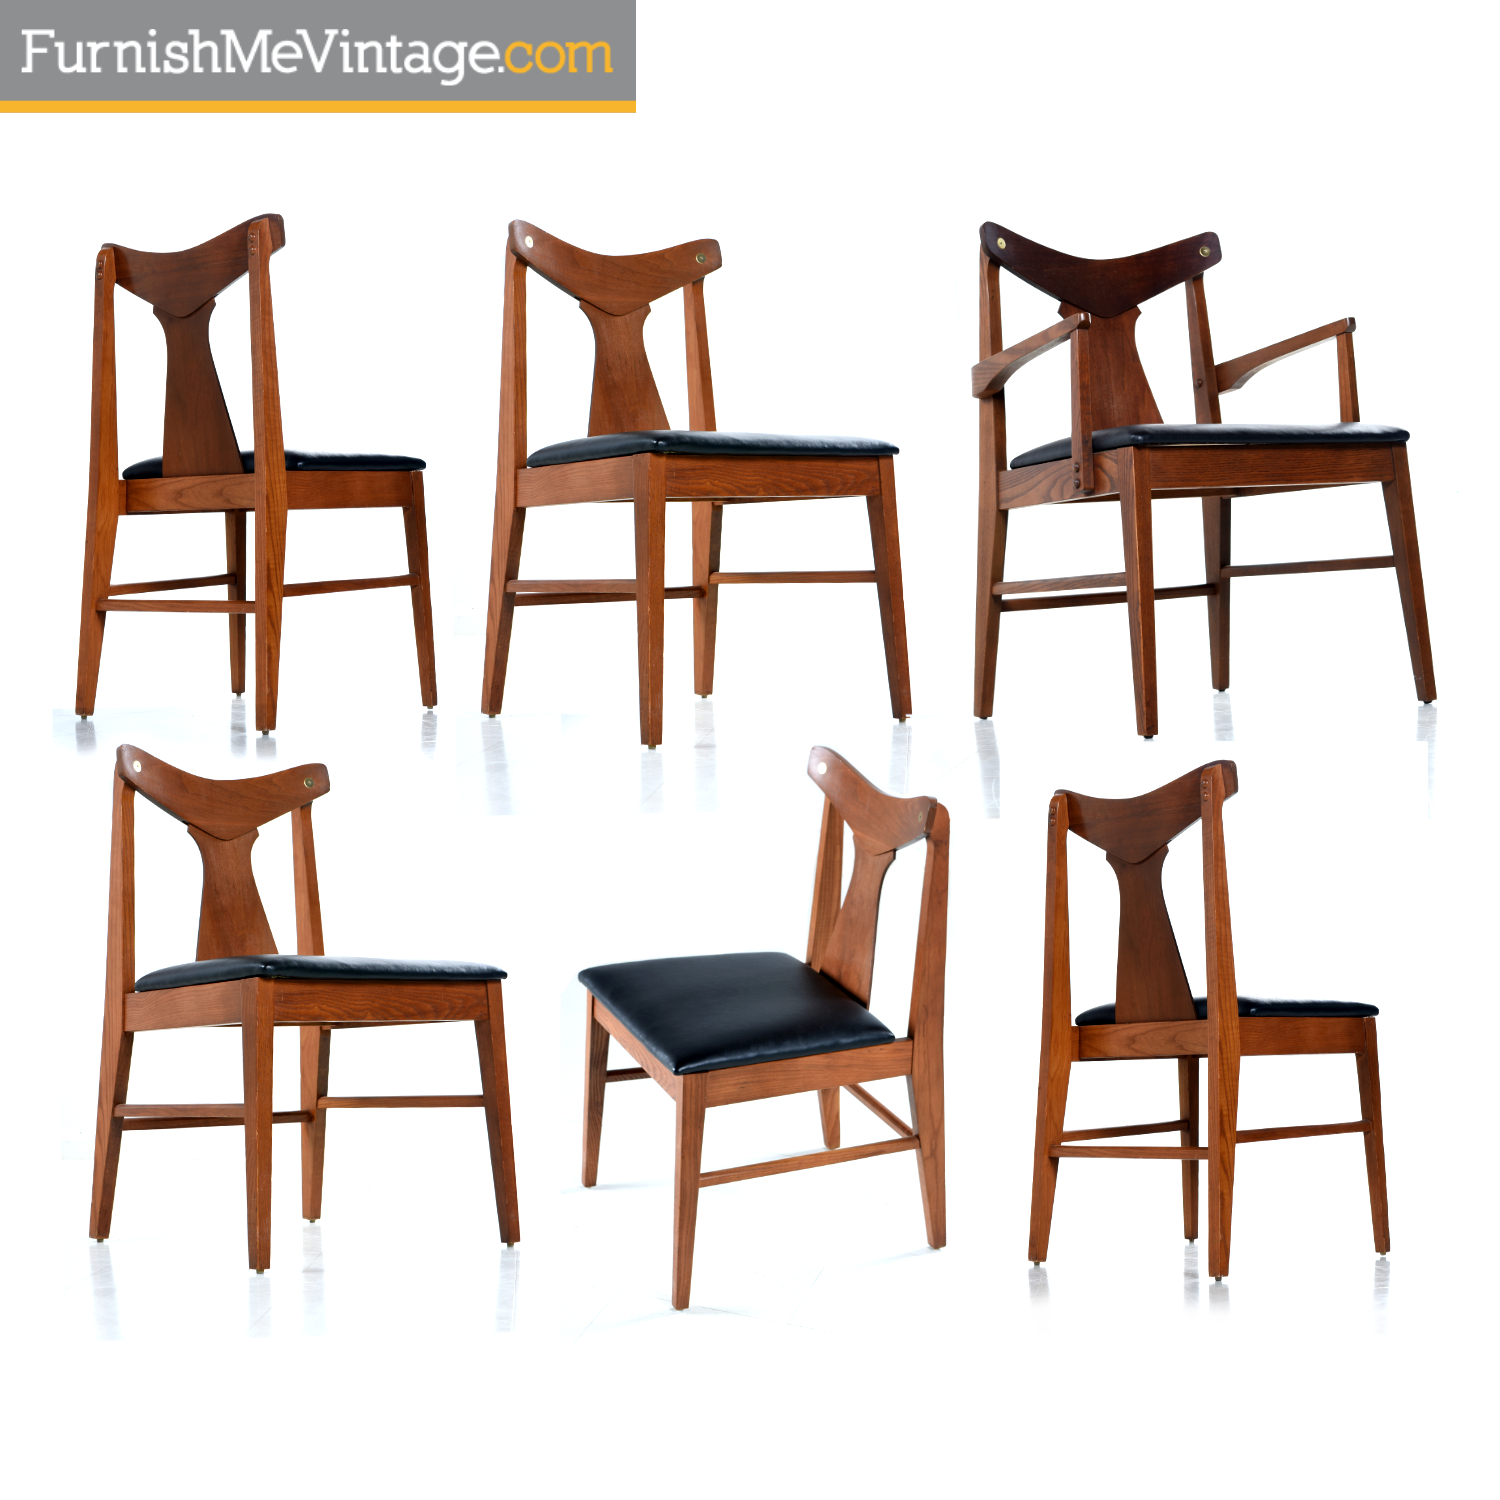 Chairs & Barstools - American ChairAmerican Chair